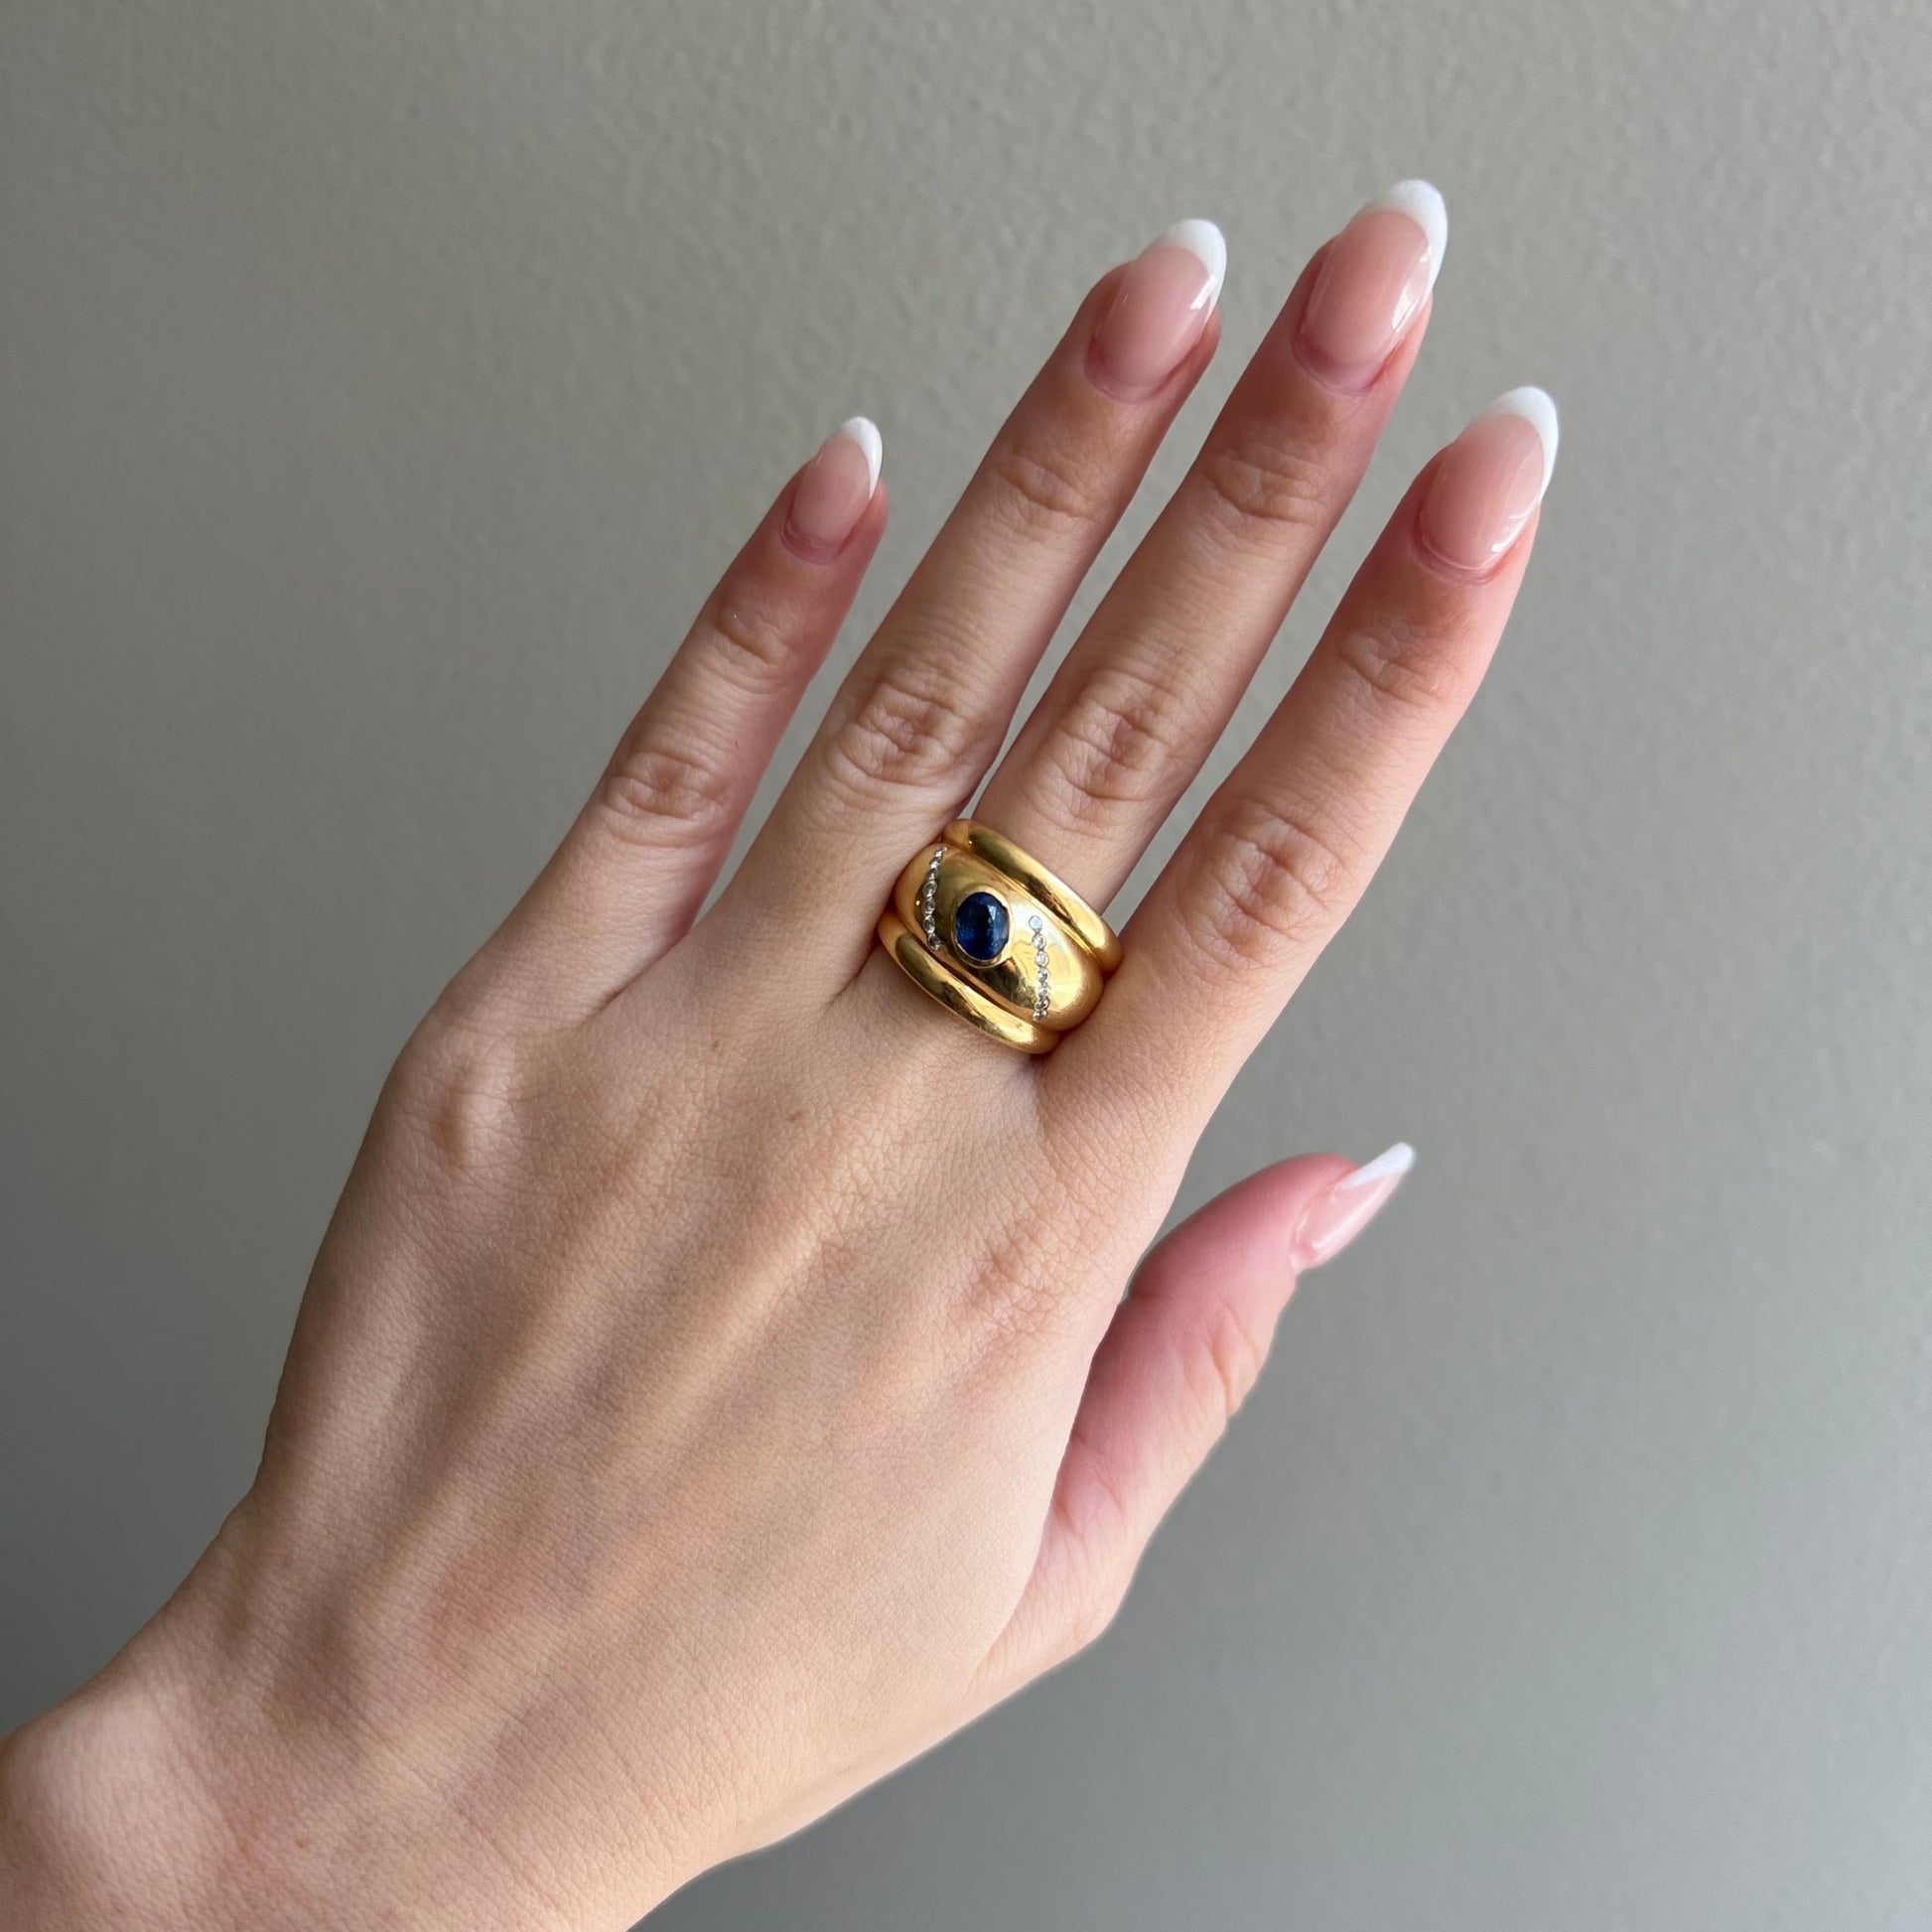 1960s 18KT Yellow Gold Sapphire & Diamond Ring on hand